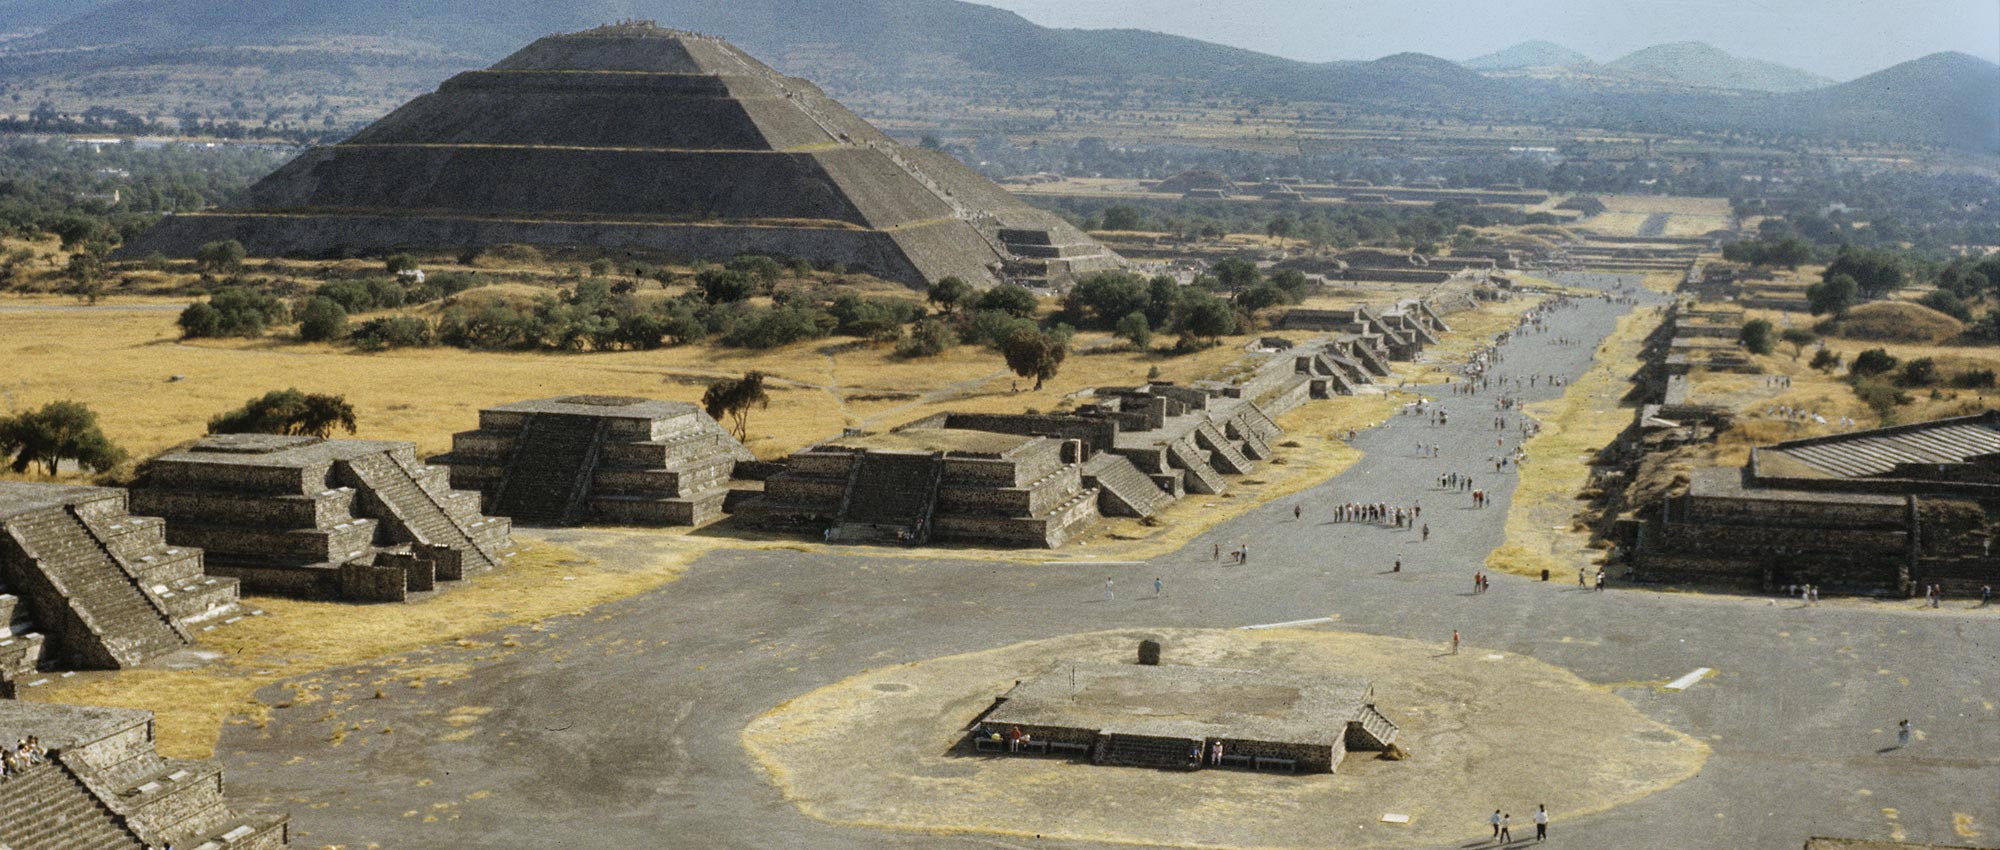 00-Teotihuacan-01-teo-01-300-dpi-Q-2-2000-850_03.jpg